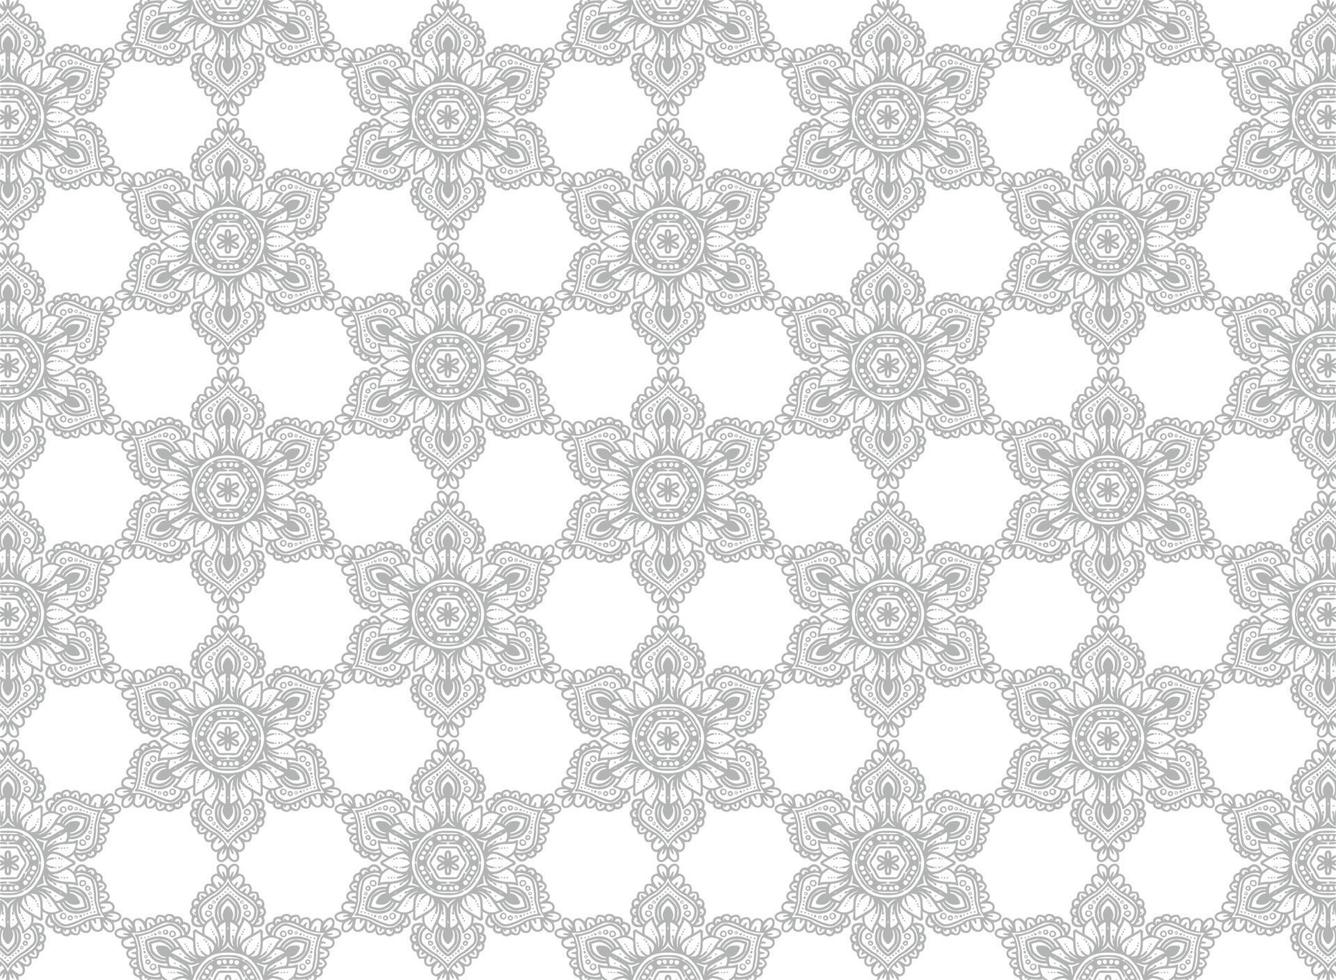 etnisk dekorativ grå blommig mandala mönster på vit bakgrund vektor